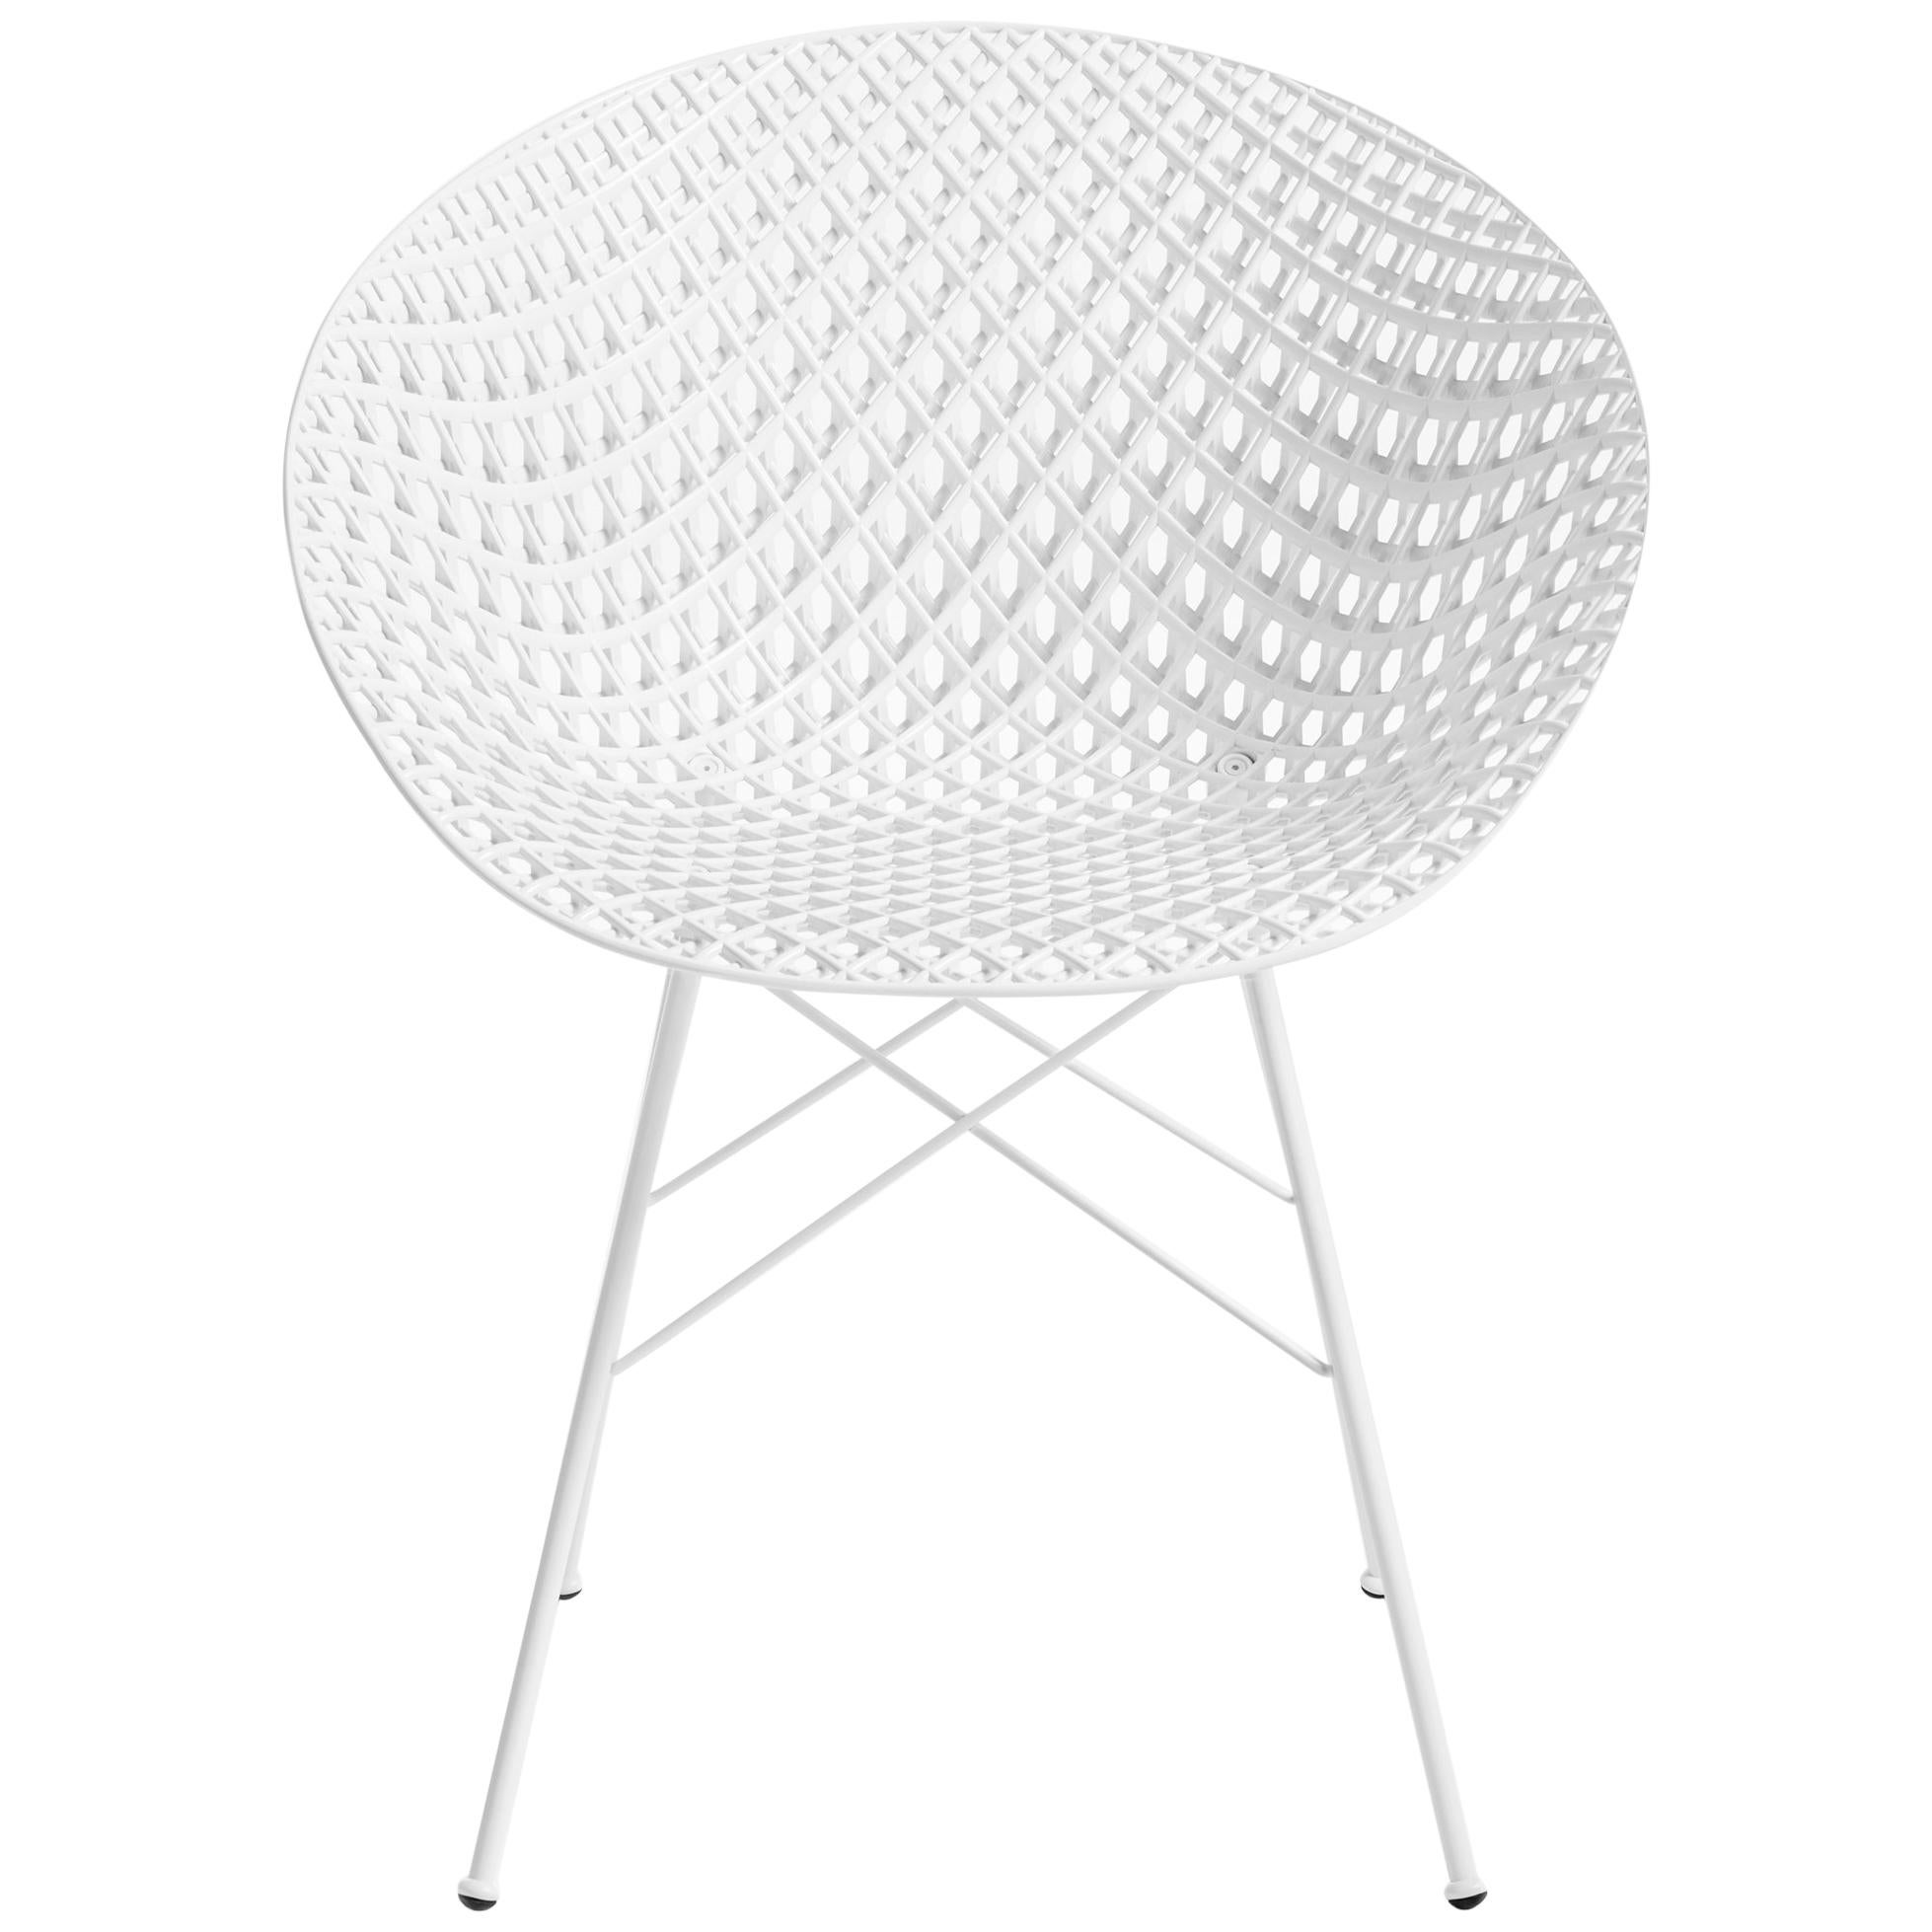 Set of 2 Kartell Smatrik Chair in White with White Legs by Tokujin Yoshioka